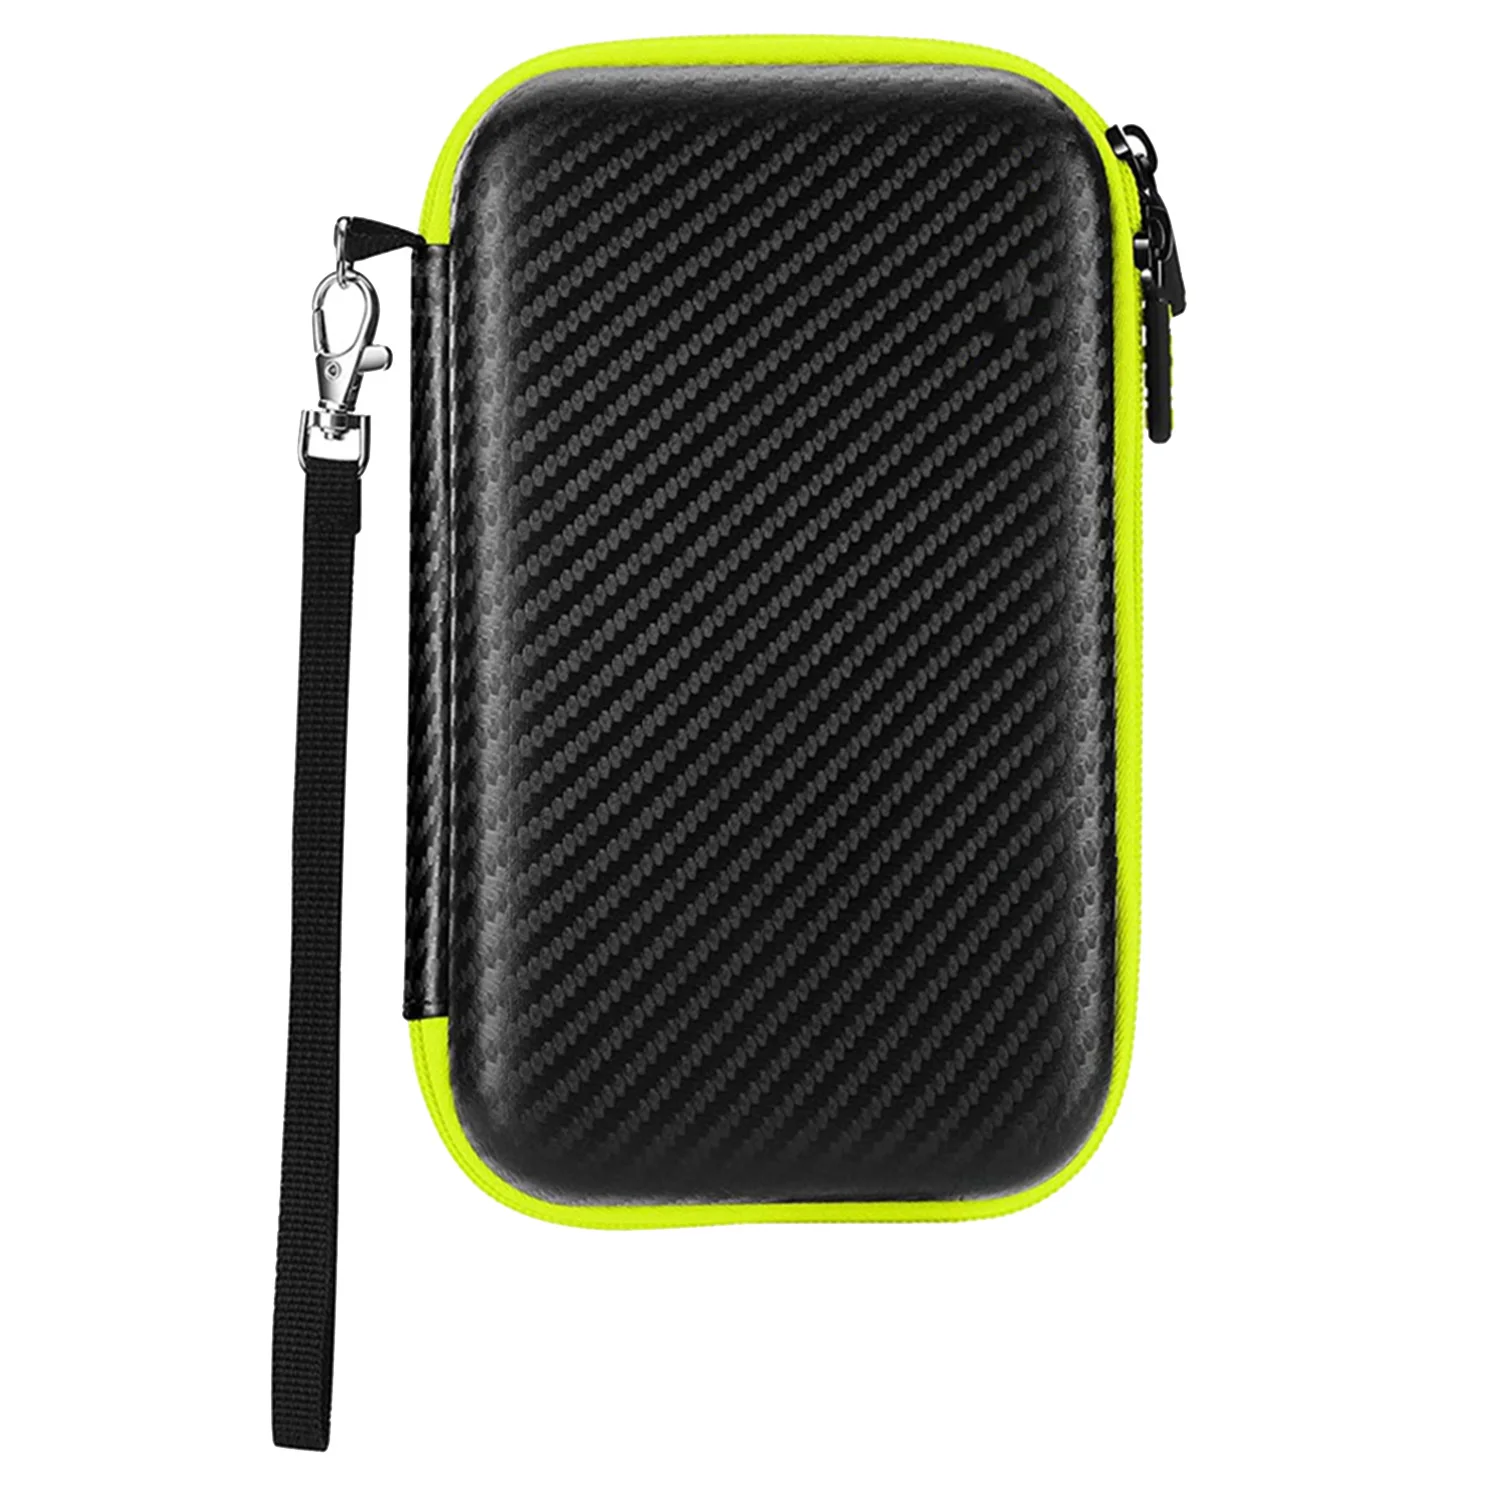 

Hard Case Organizer Shaver Travel Bag Storage Box Cover Zipper Pouch for Oneblade QP2520, QP2530, QP2620, QP2630